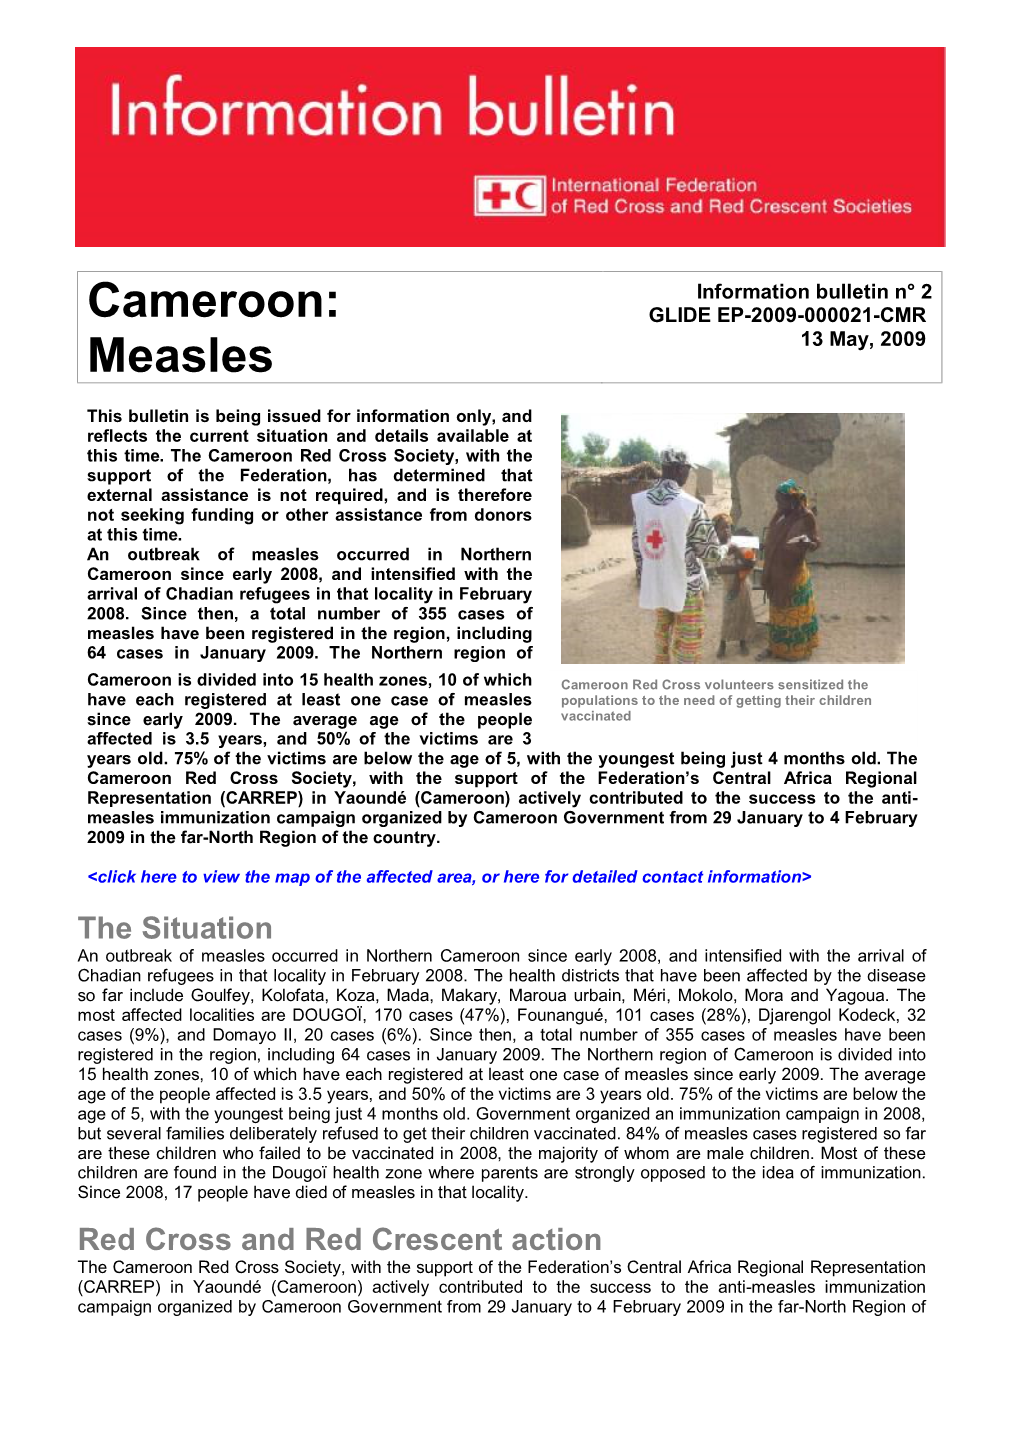 Cameroon: Measles